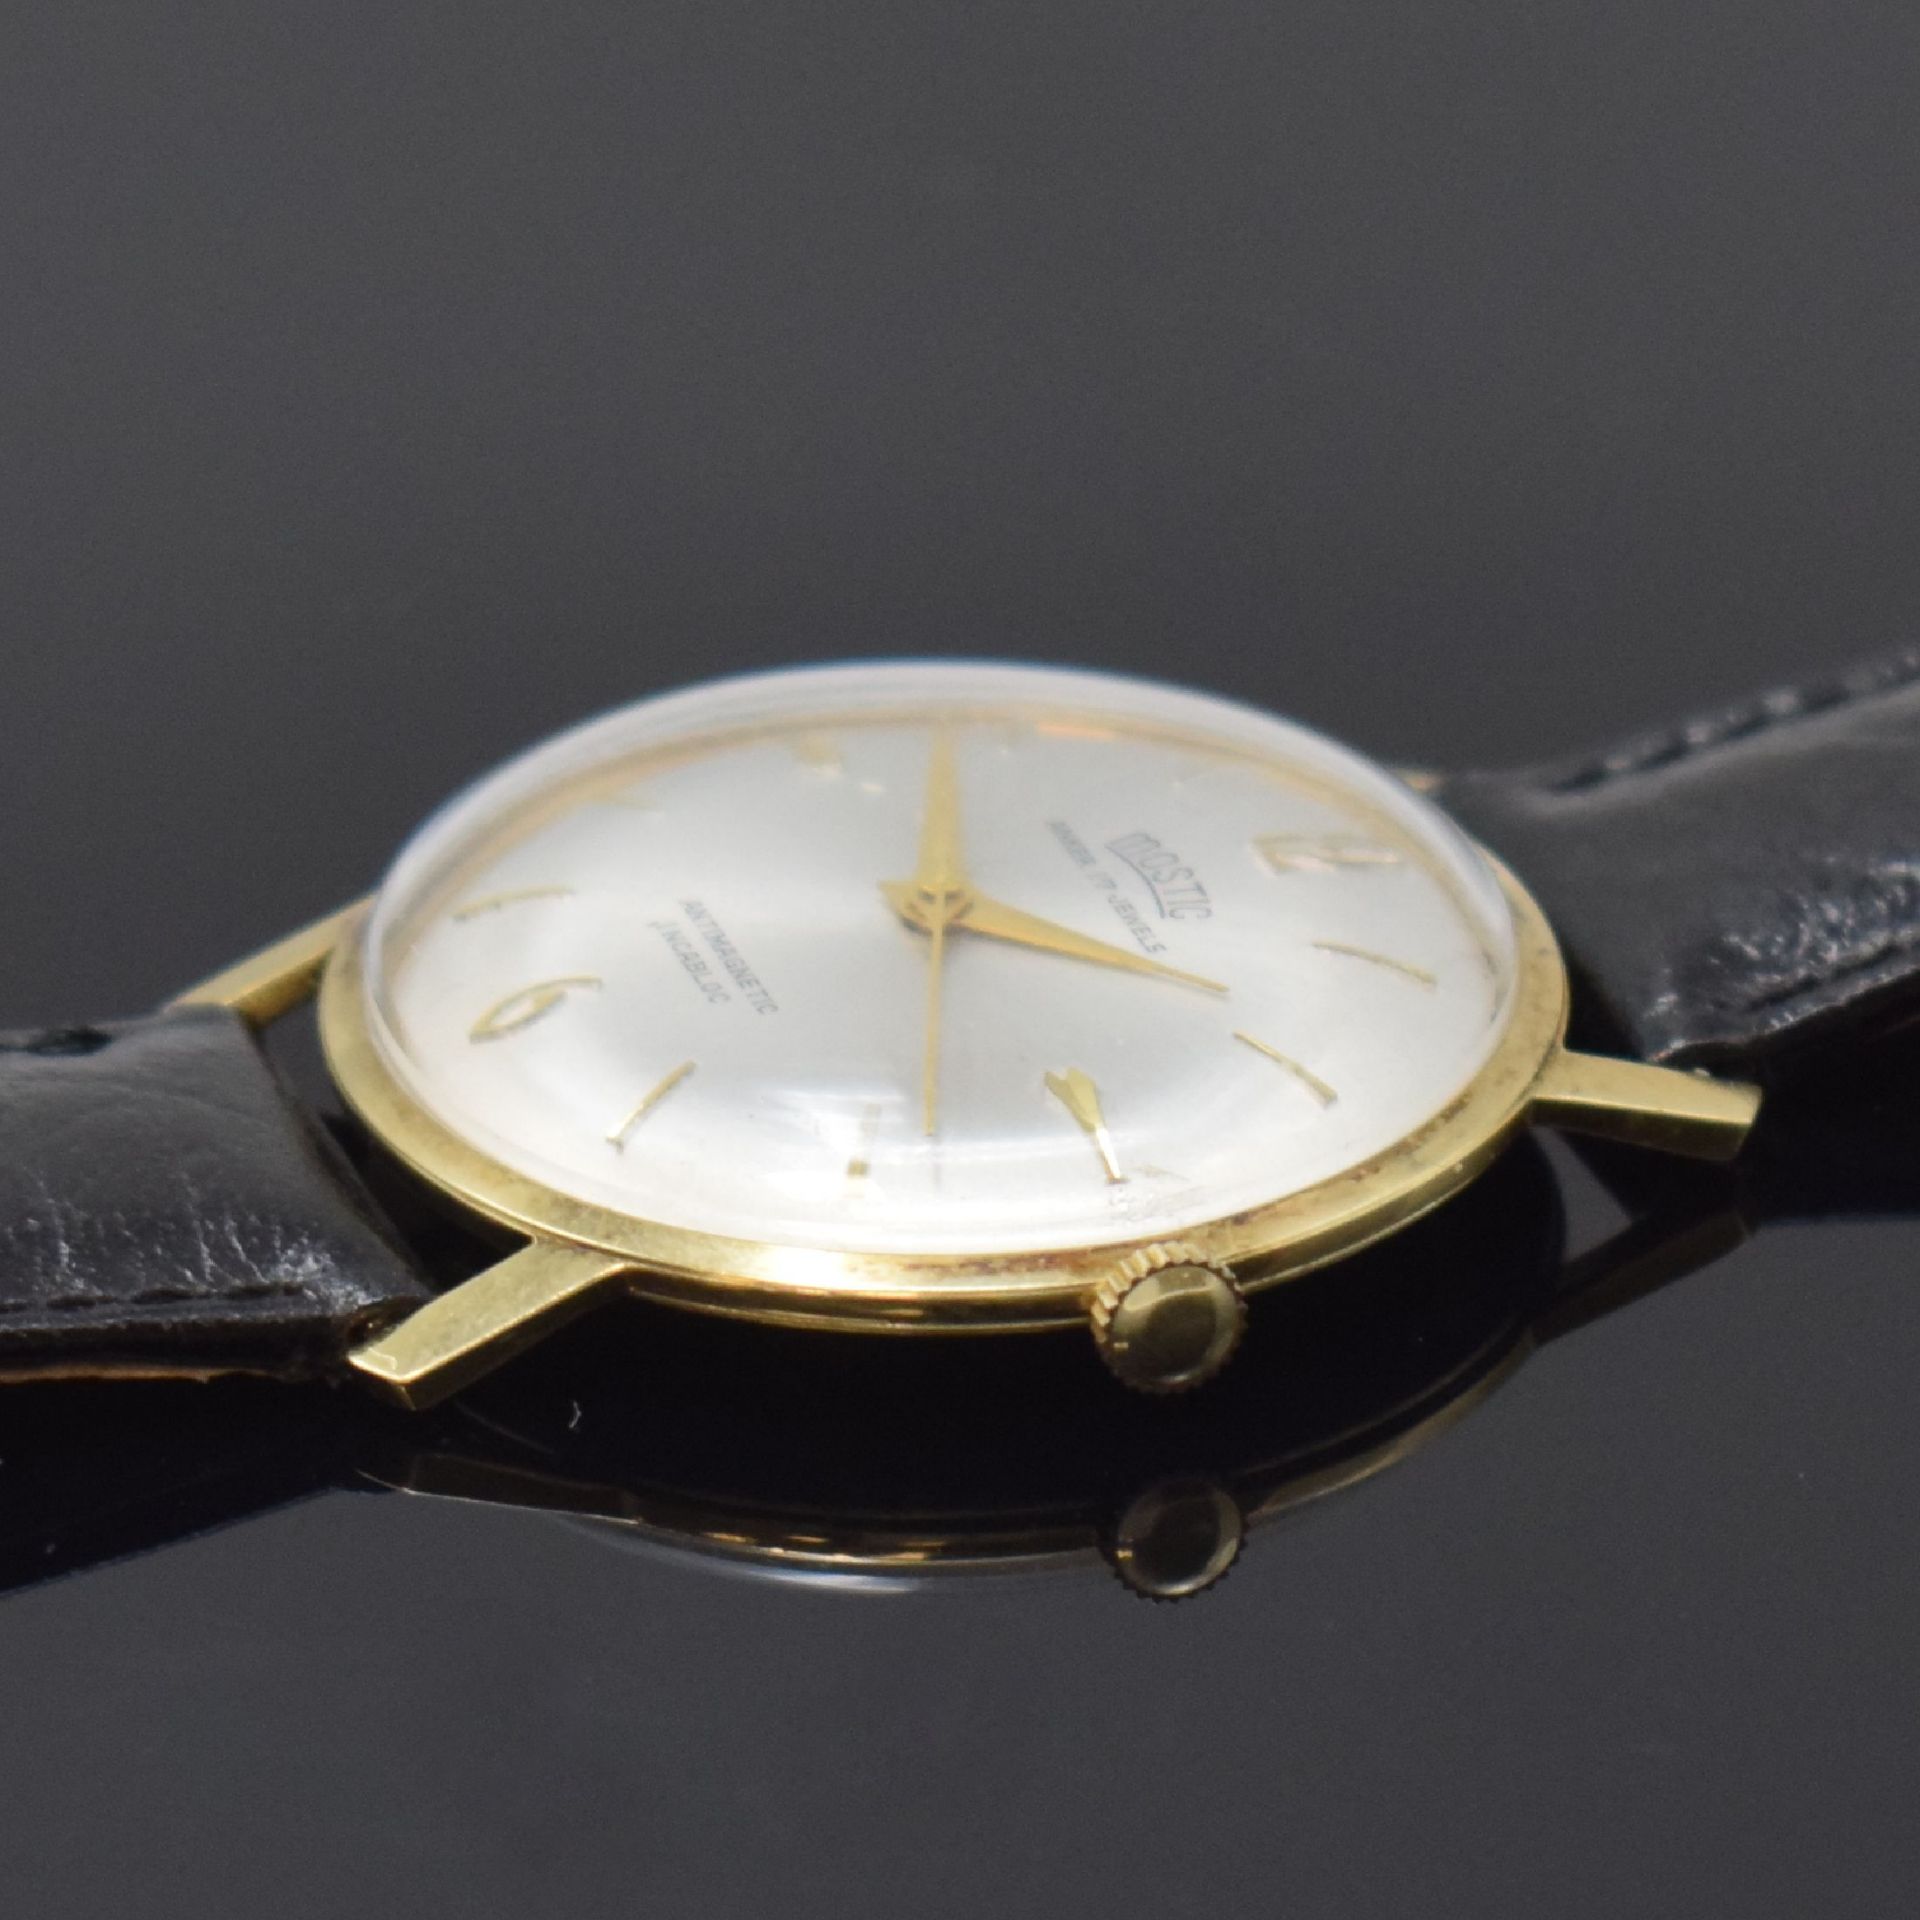 MOSTIC Armbanduhr in GG 585/000, Schweiz um 1965, - Image 3 of 5